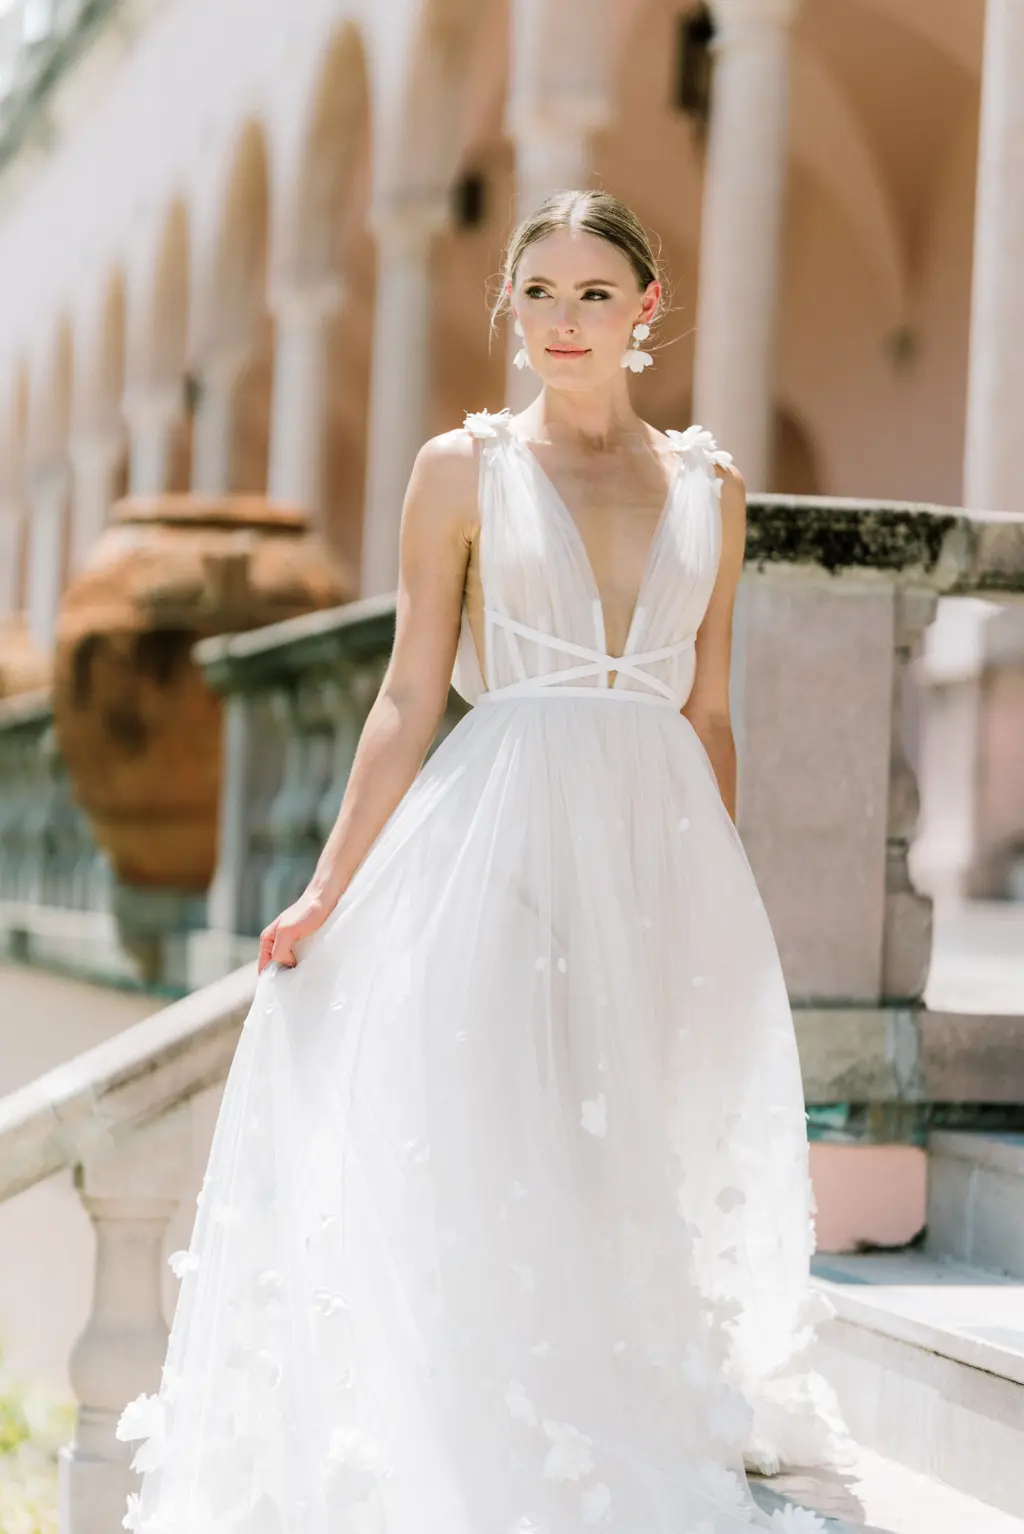 White Tulle Deep V Neckline, A-Line Marchesa Italian Wedding Dress with Floral Applique Inspiration | Sarasota Photographer Amber Yonker Photography